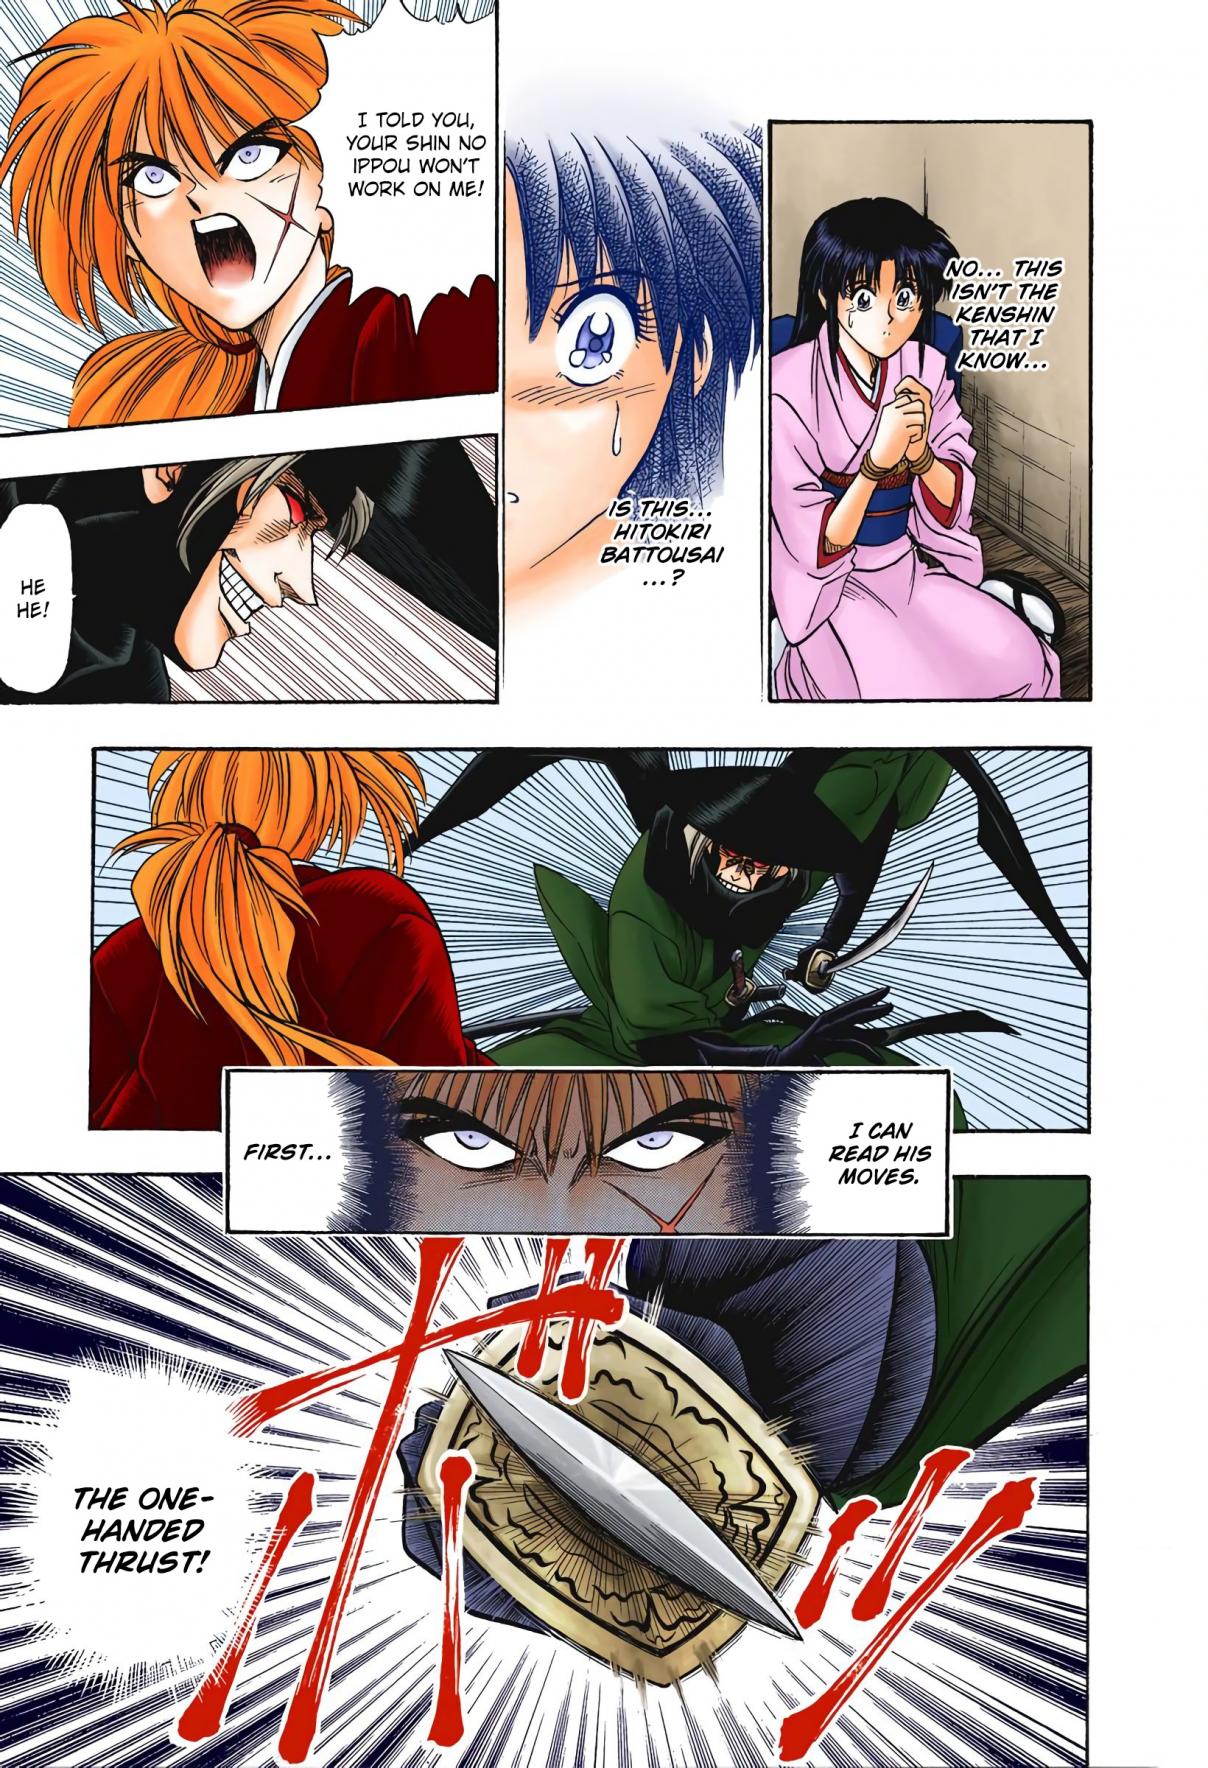 Rurouni Kenshin Digital Colored Comics Vol. 2 Ch. 12 The Two Hitokiri